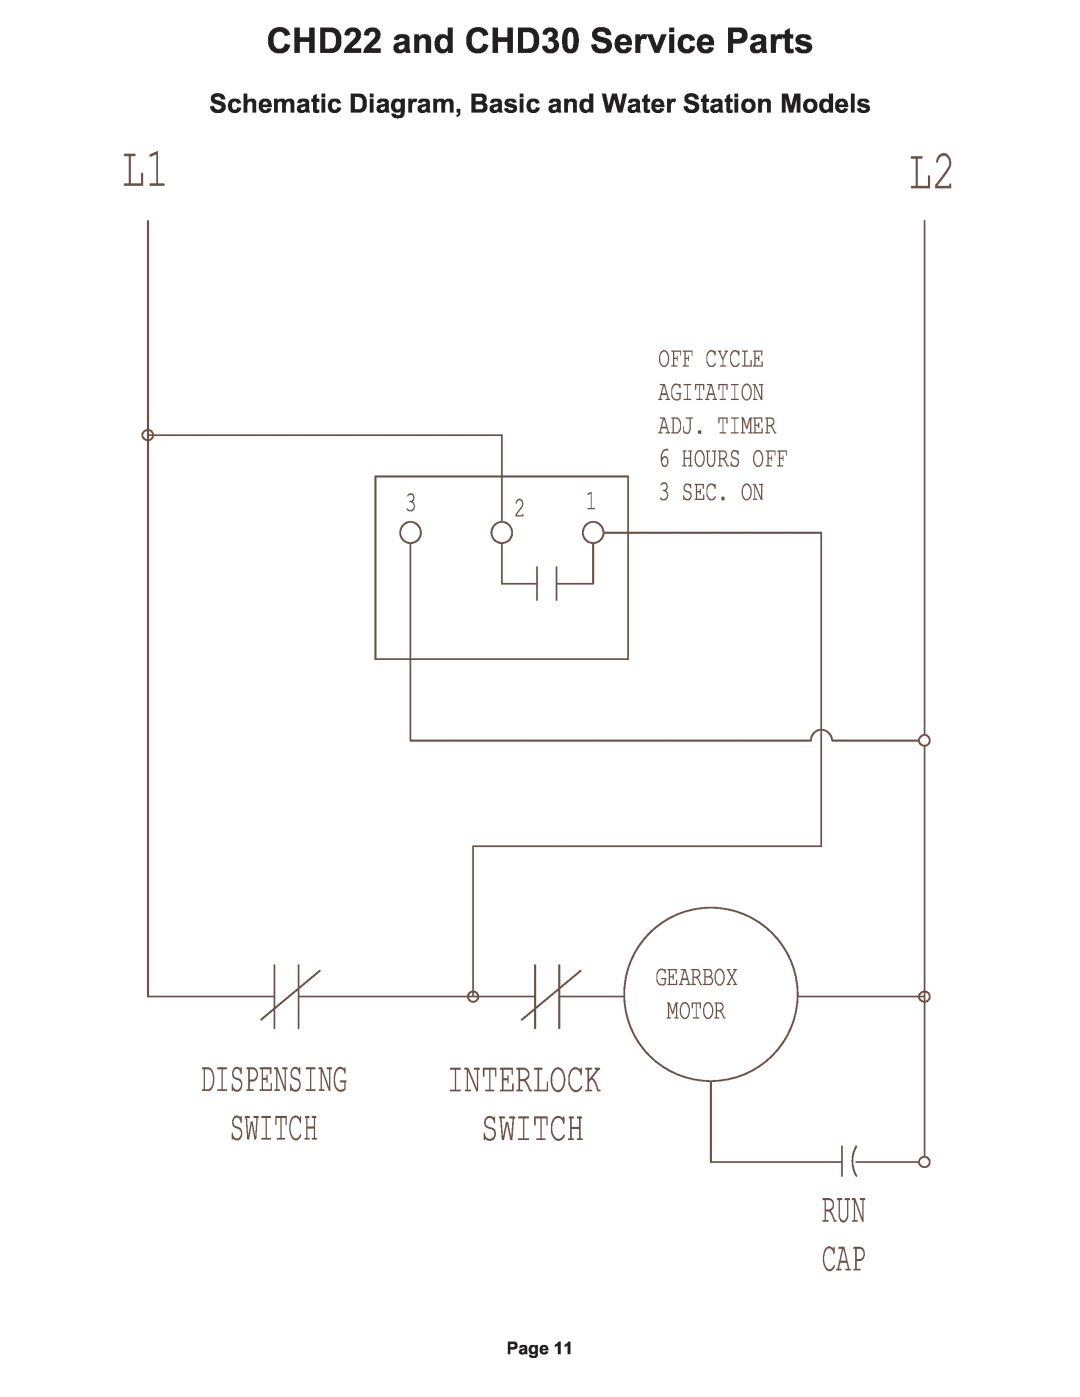 Cornelius manual L1L2, Dispensing Interlock Switch Switch Run Cap, CHD22 and CHD30 Service Parts, Page 